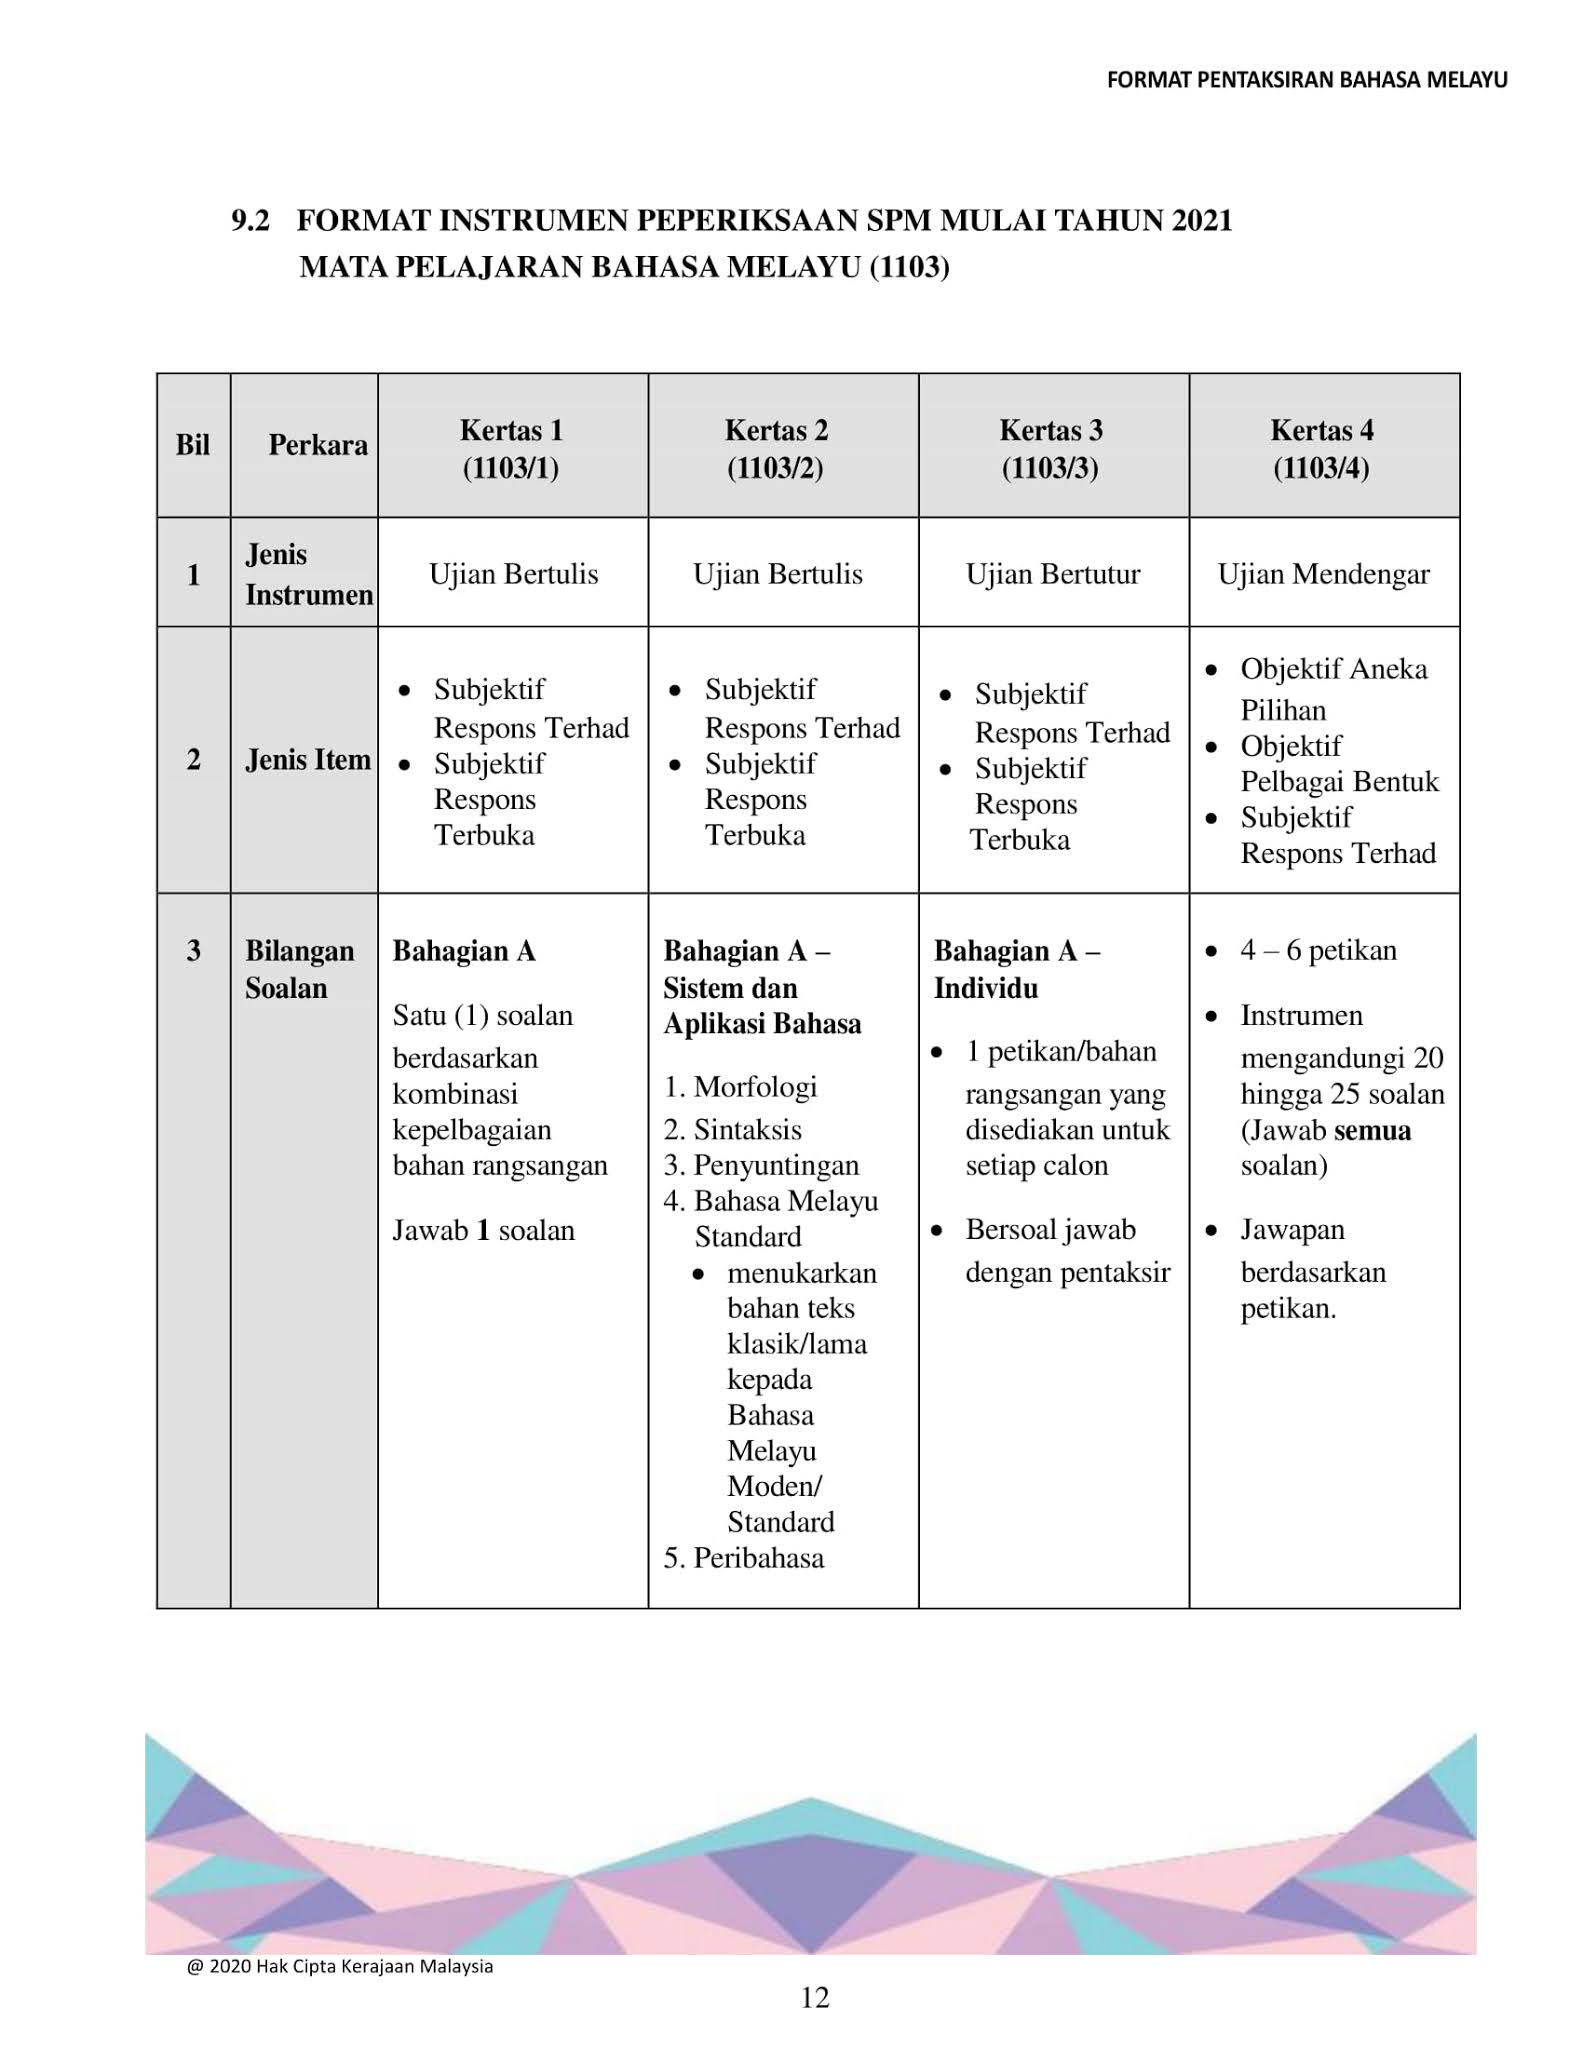 Jawapan Format Pentaksiran Bahasa Melayu Spm 2021